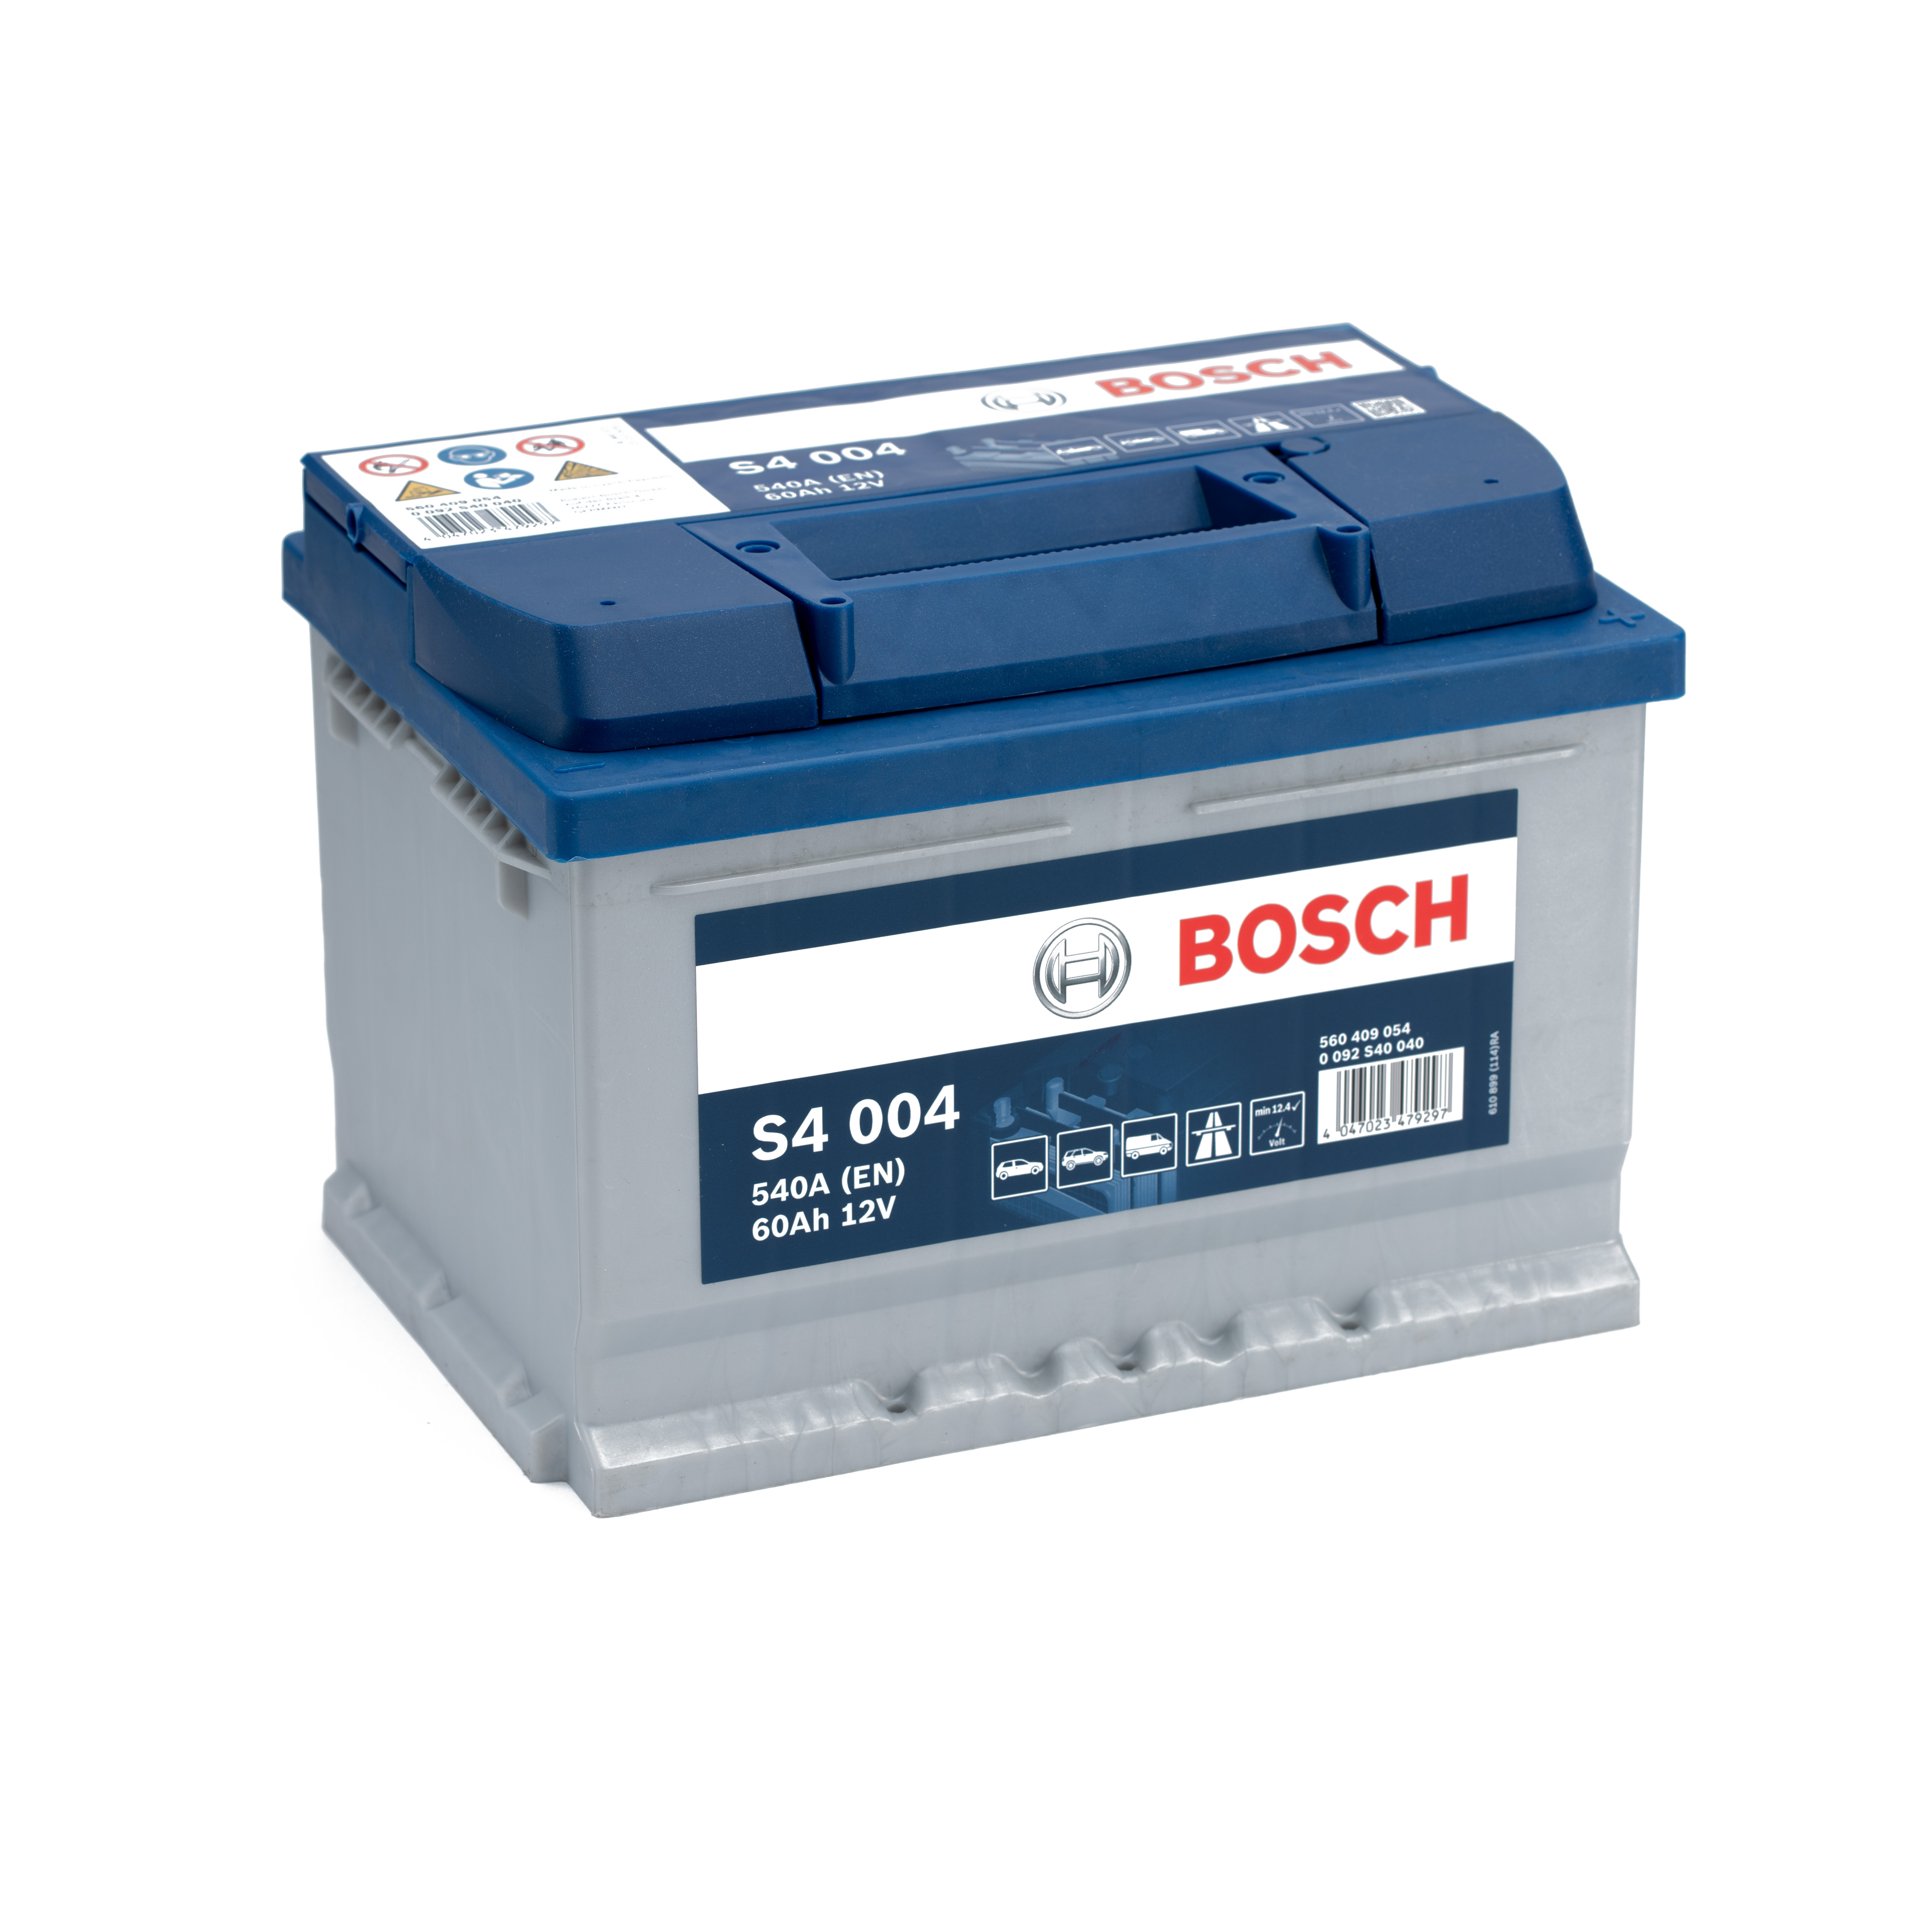 https://swissbatt24.ch/media/image/ee/94/a3/Bosch-S4-004-60Ah-Autobatterie-560409054.jpg